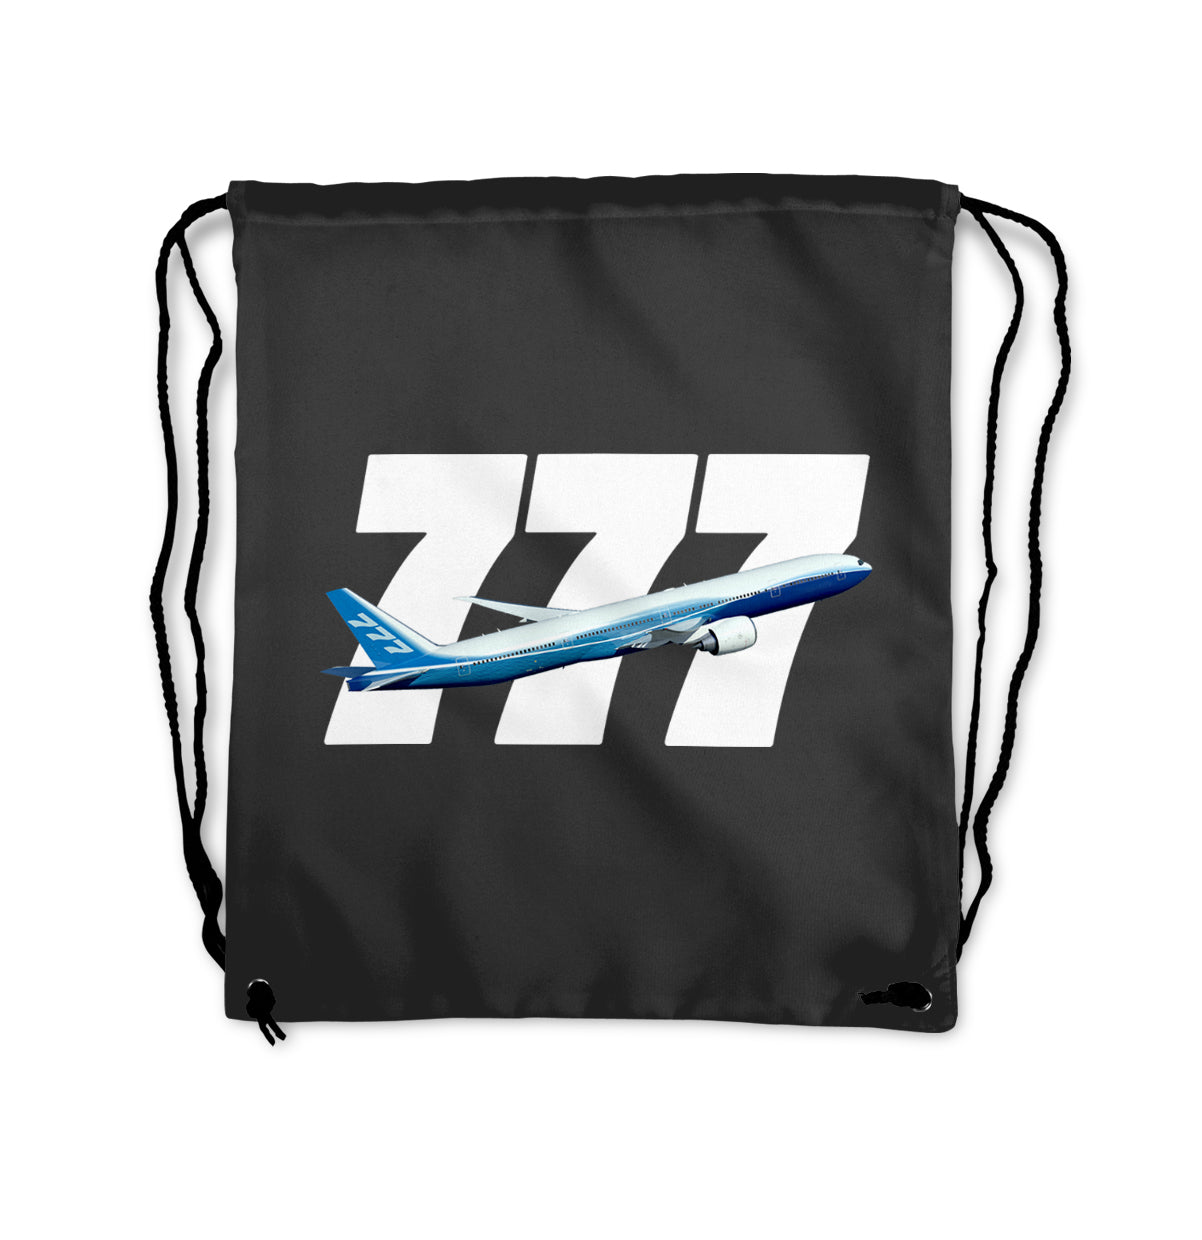 Super Boeing 777 Designed Drawstring Bags